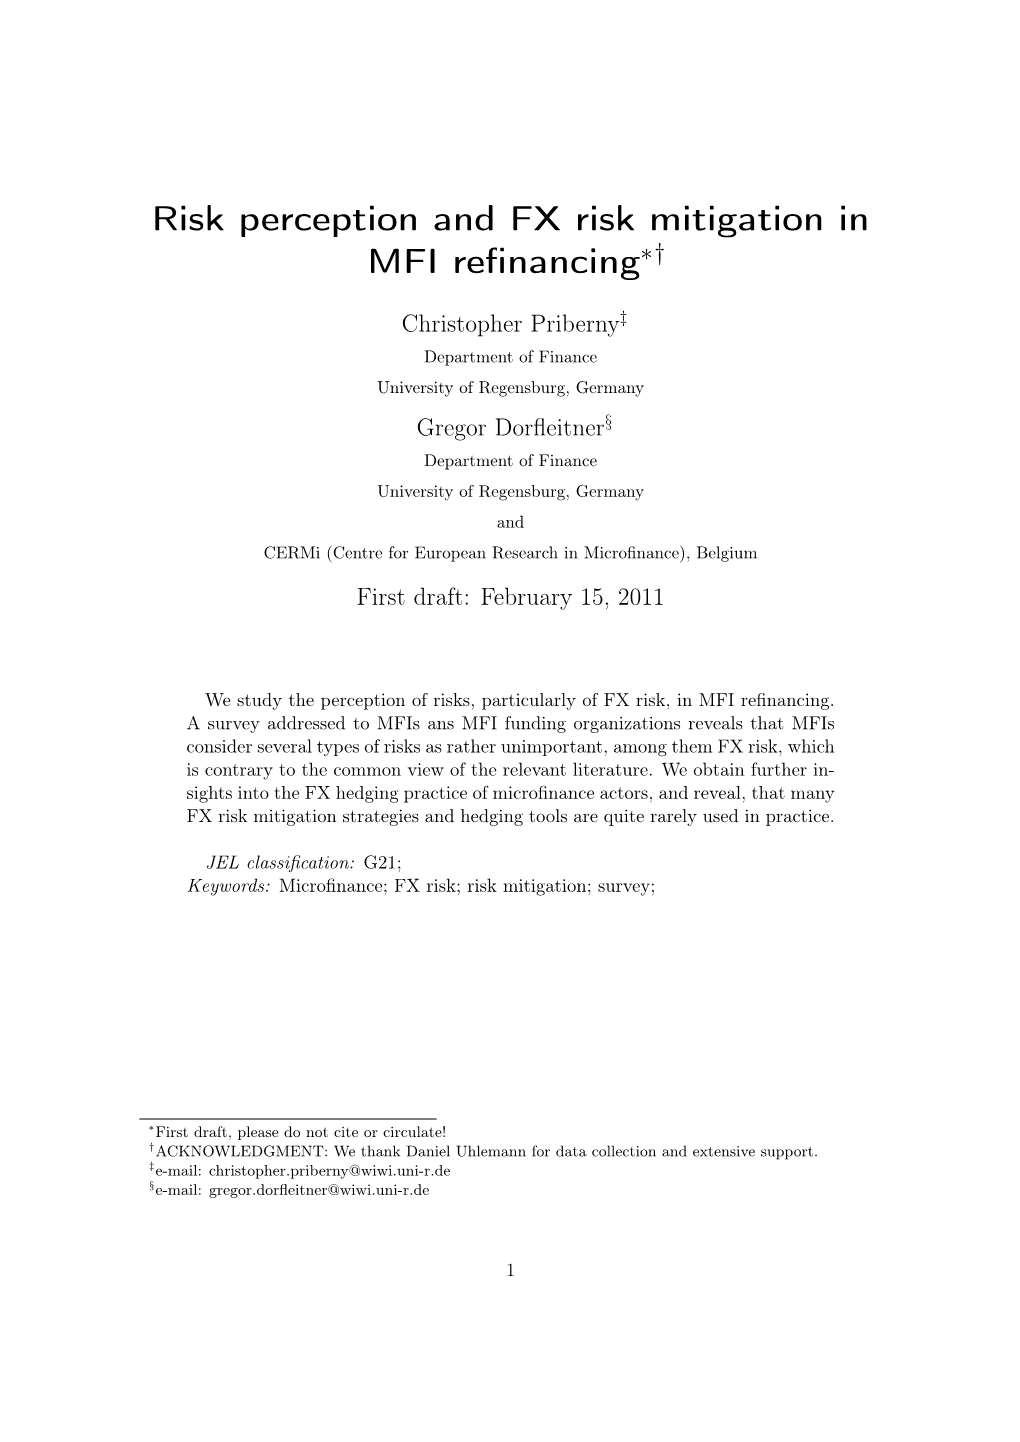 Risk Perception and FX Risk Mitigation in MFI Refinancing